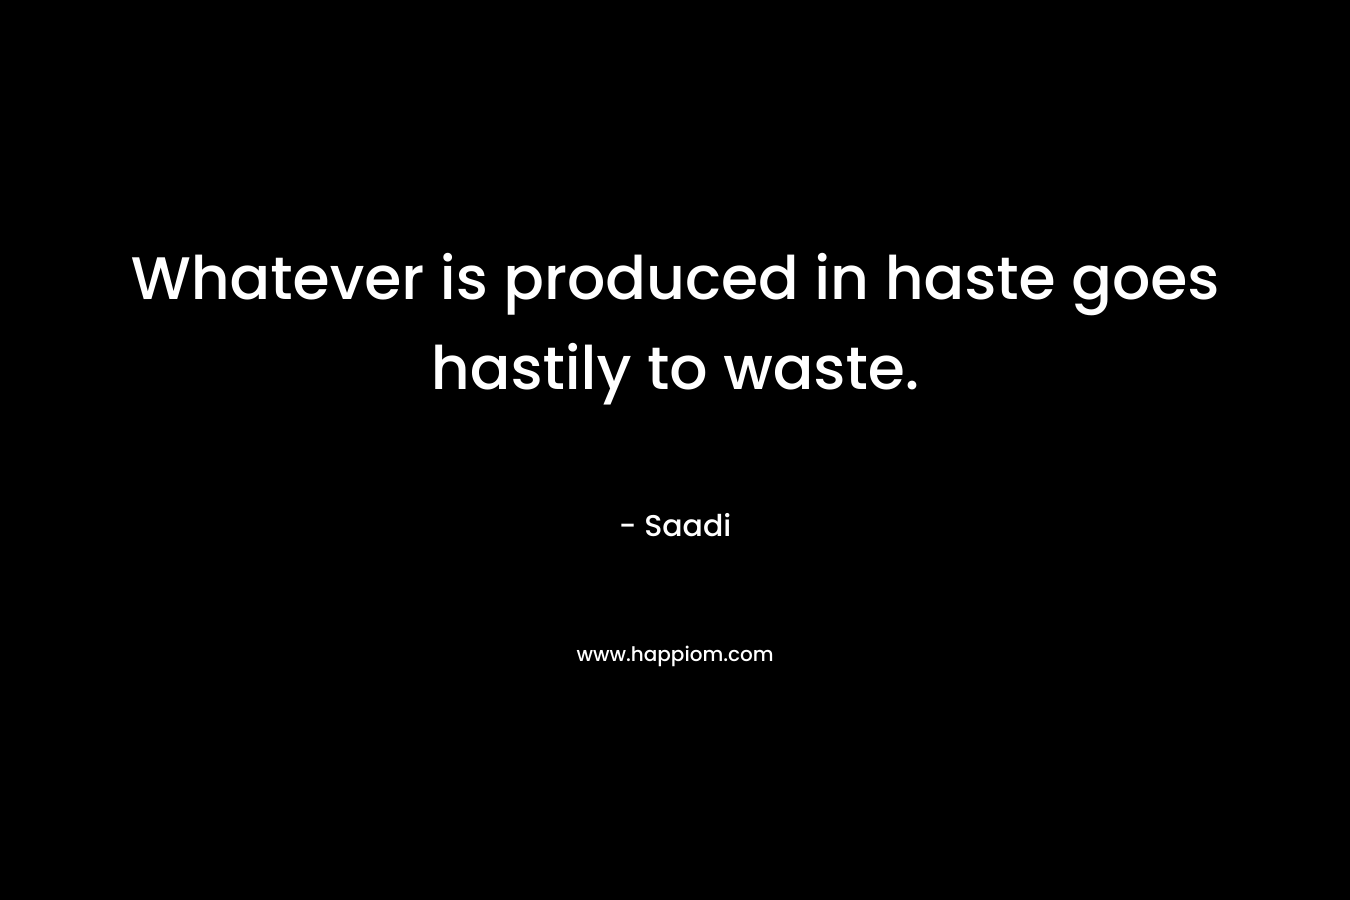 Whatever is produced in haste goes hastily to waste. – Saadi